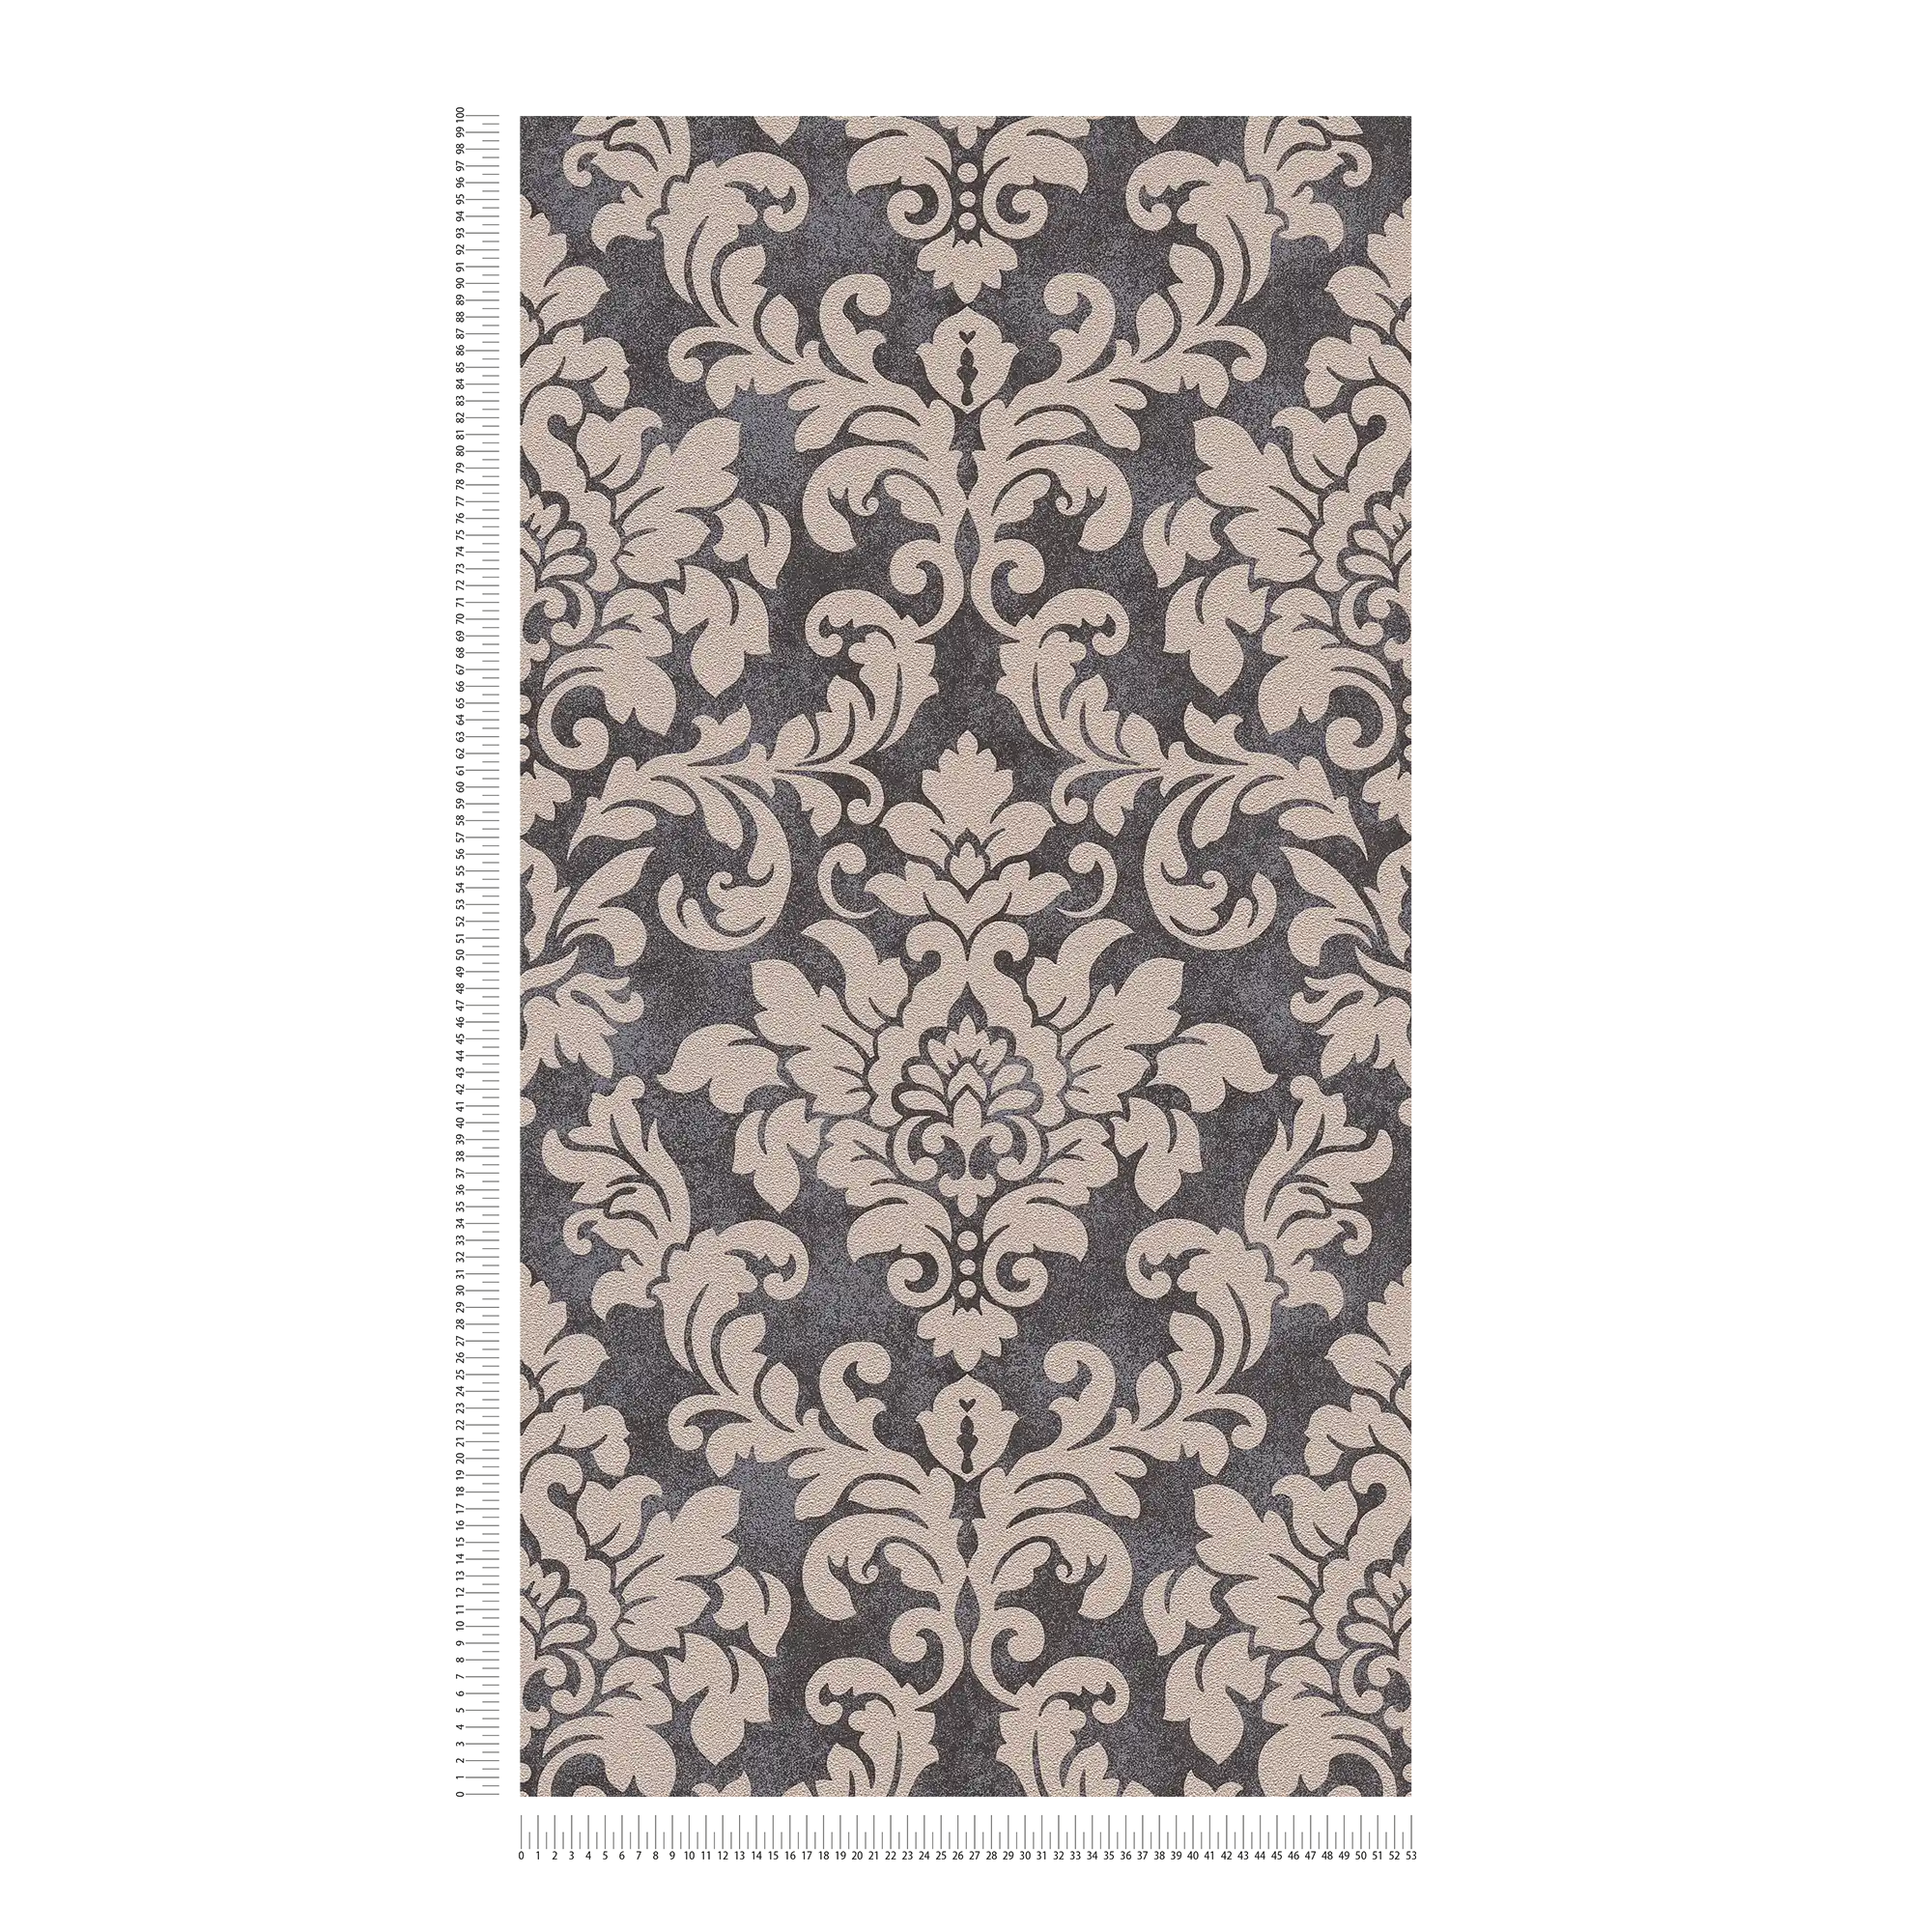             Floral ornamental wallpaper with metallic effect - black, silver, beige
        